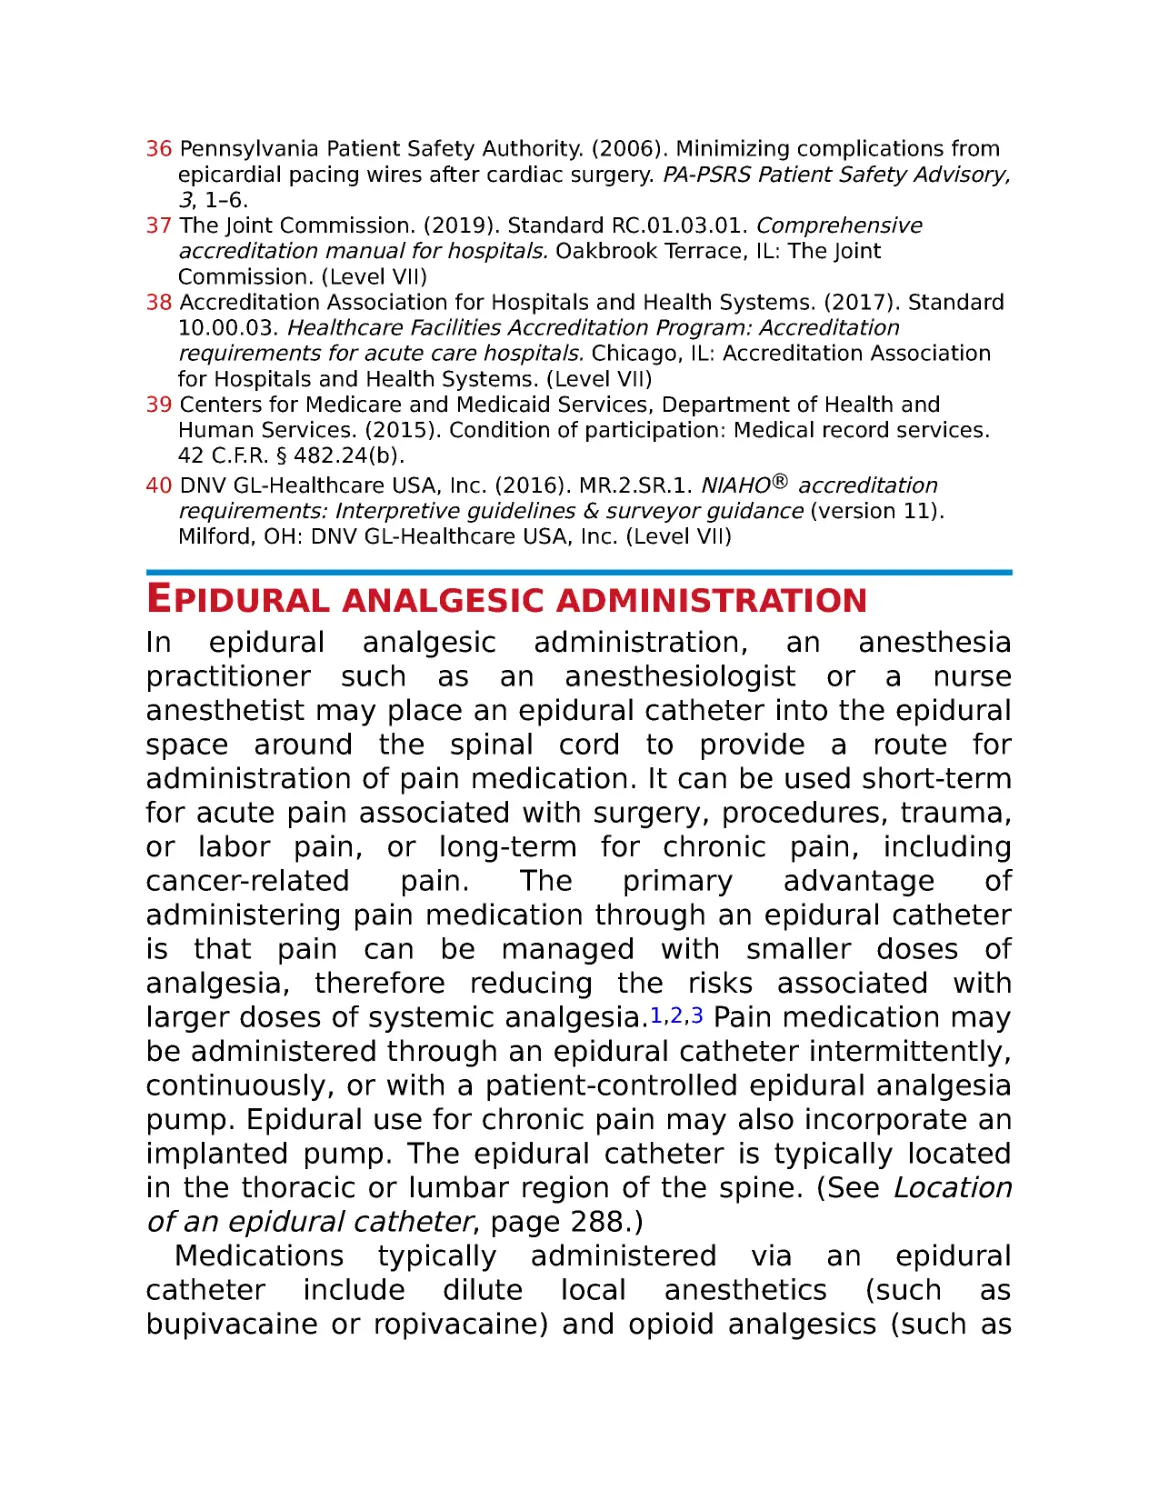 Epidural analgesic administration